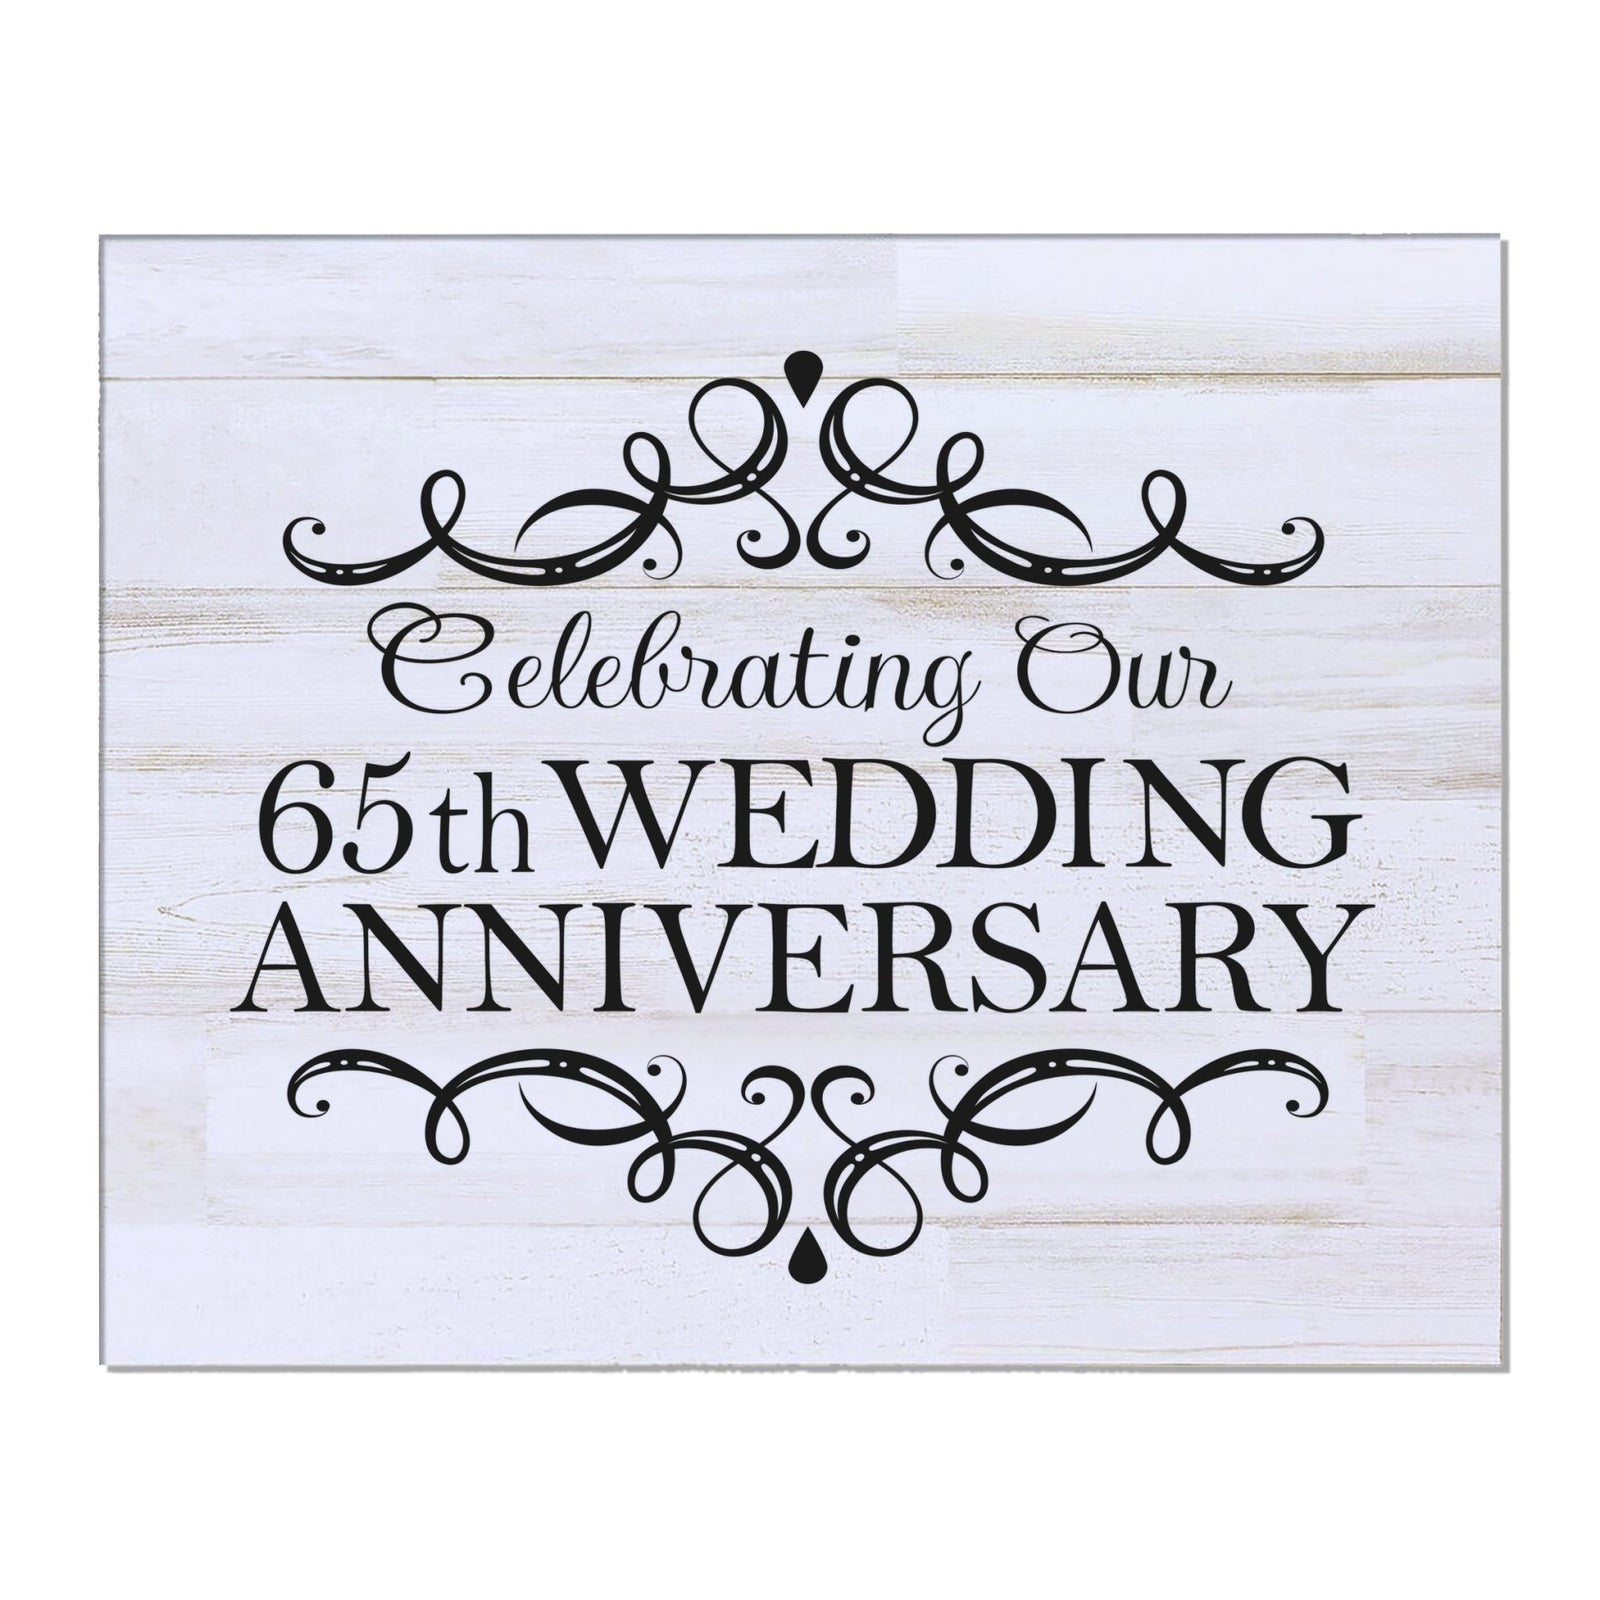 65th Wedding Anniversary Wall Plaque - Celebrating - LifeSong Milestones